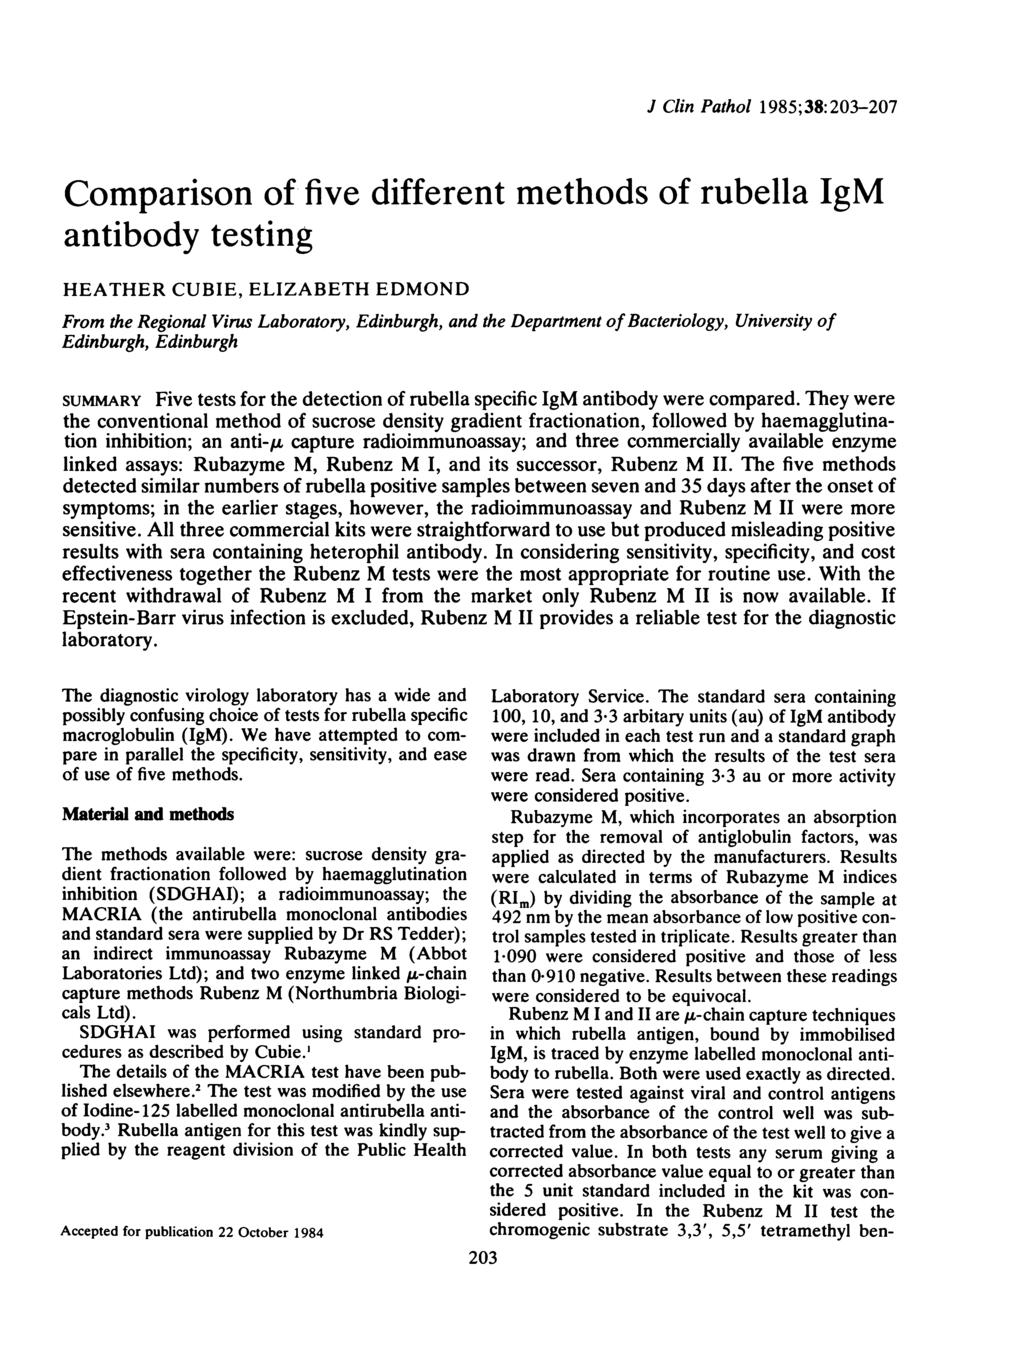 J Clin Pathol 1985;38:203-207 Comparison of five different methods of rubella IgM antibody testing HEATHER CUBIE, ELIZABETH EDMOND From the Regional Virus Laboratory, Edinburgh, and the Departmnent